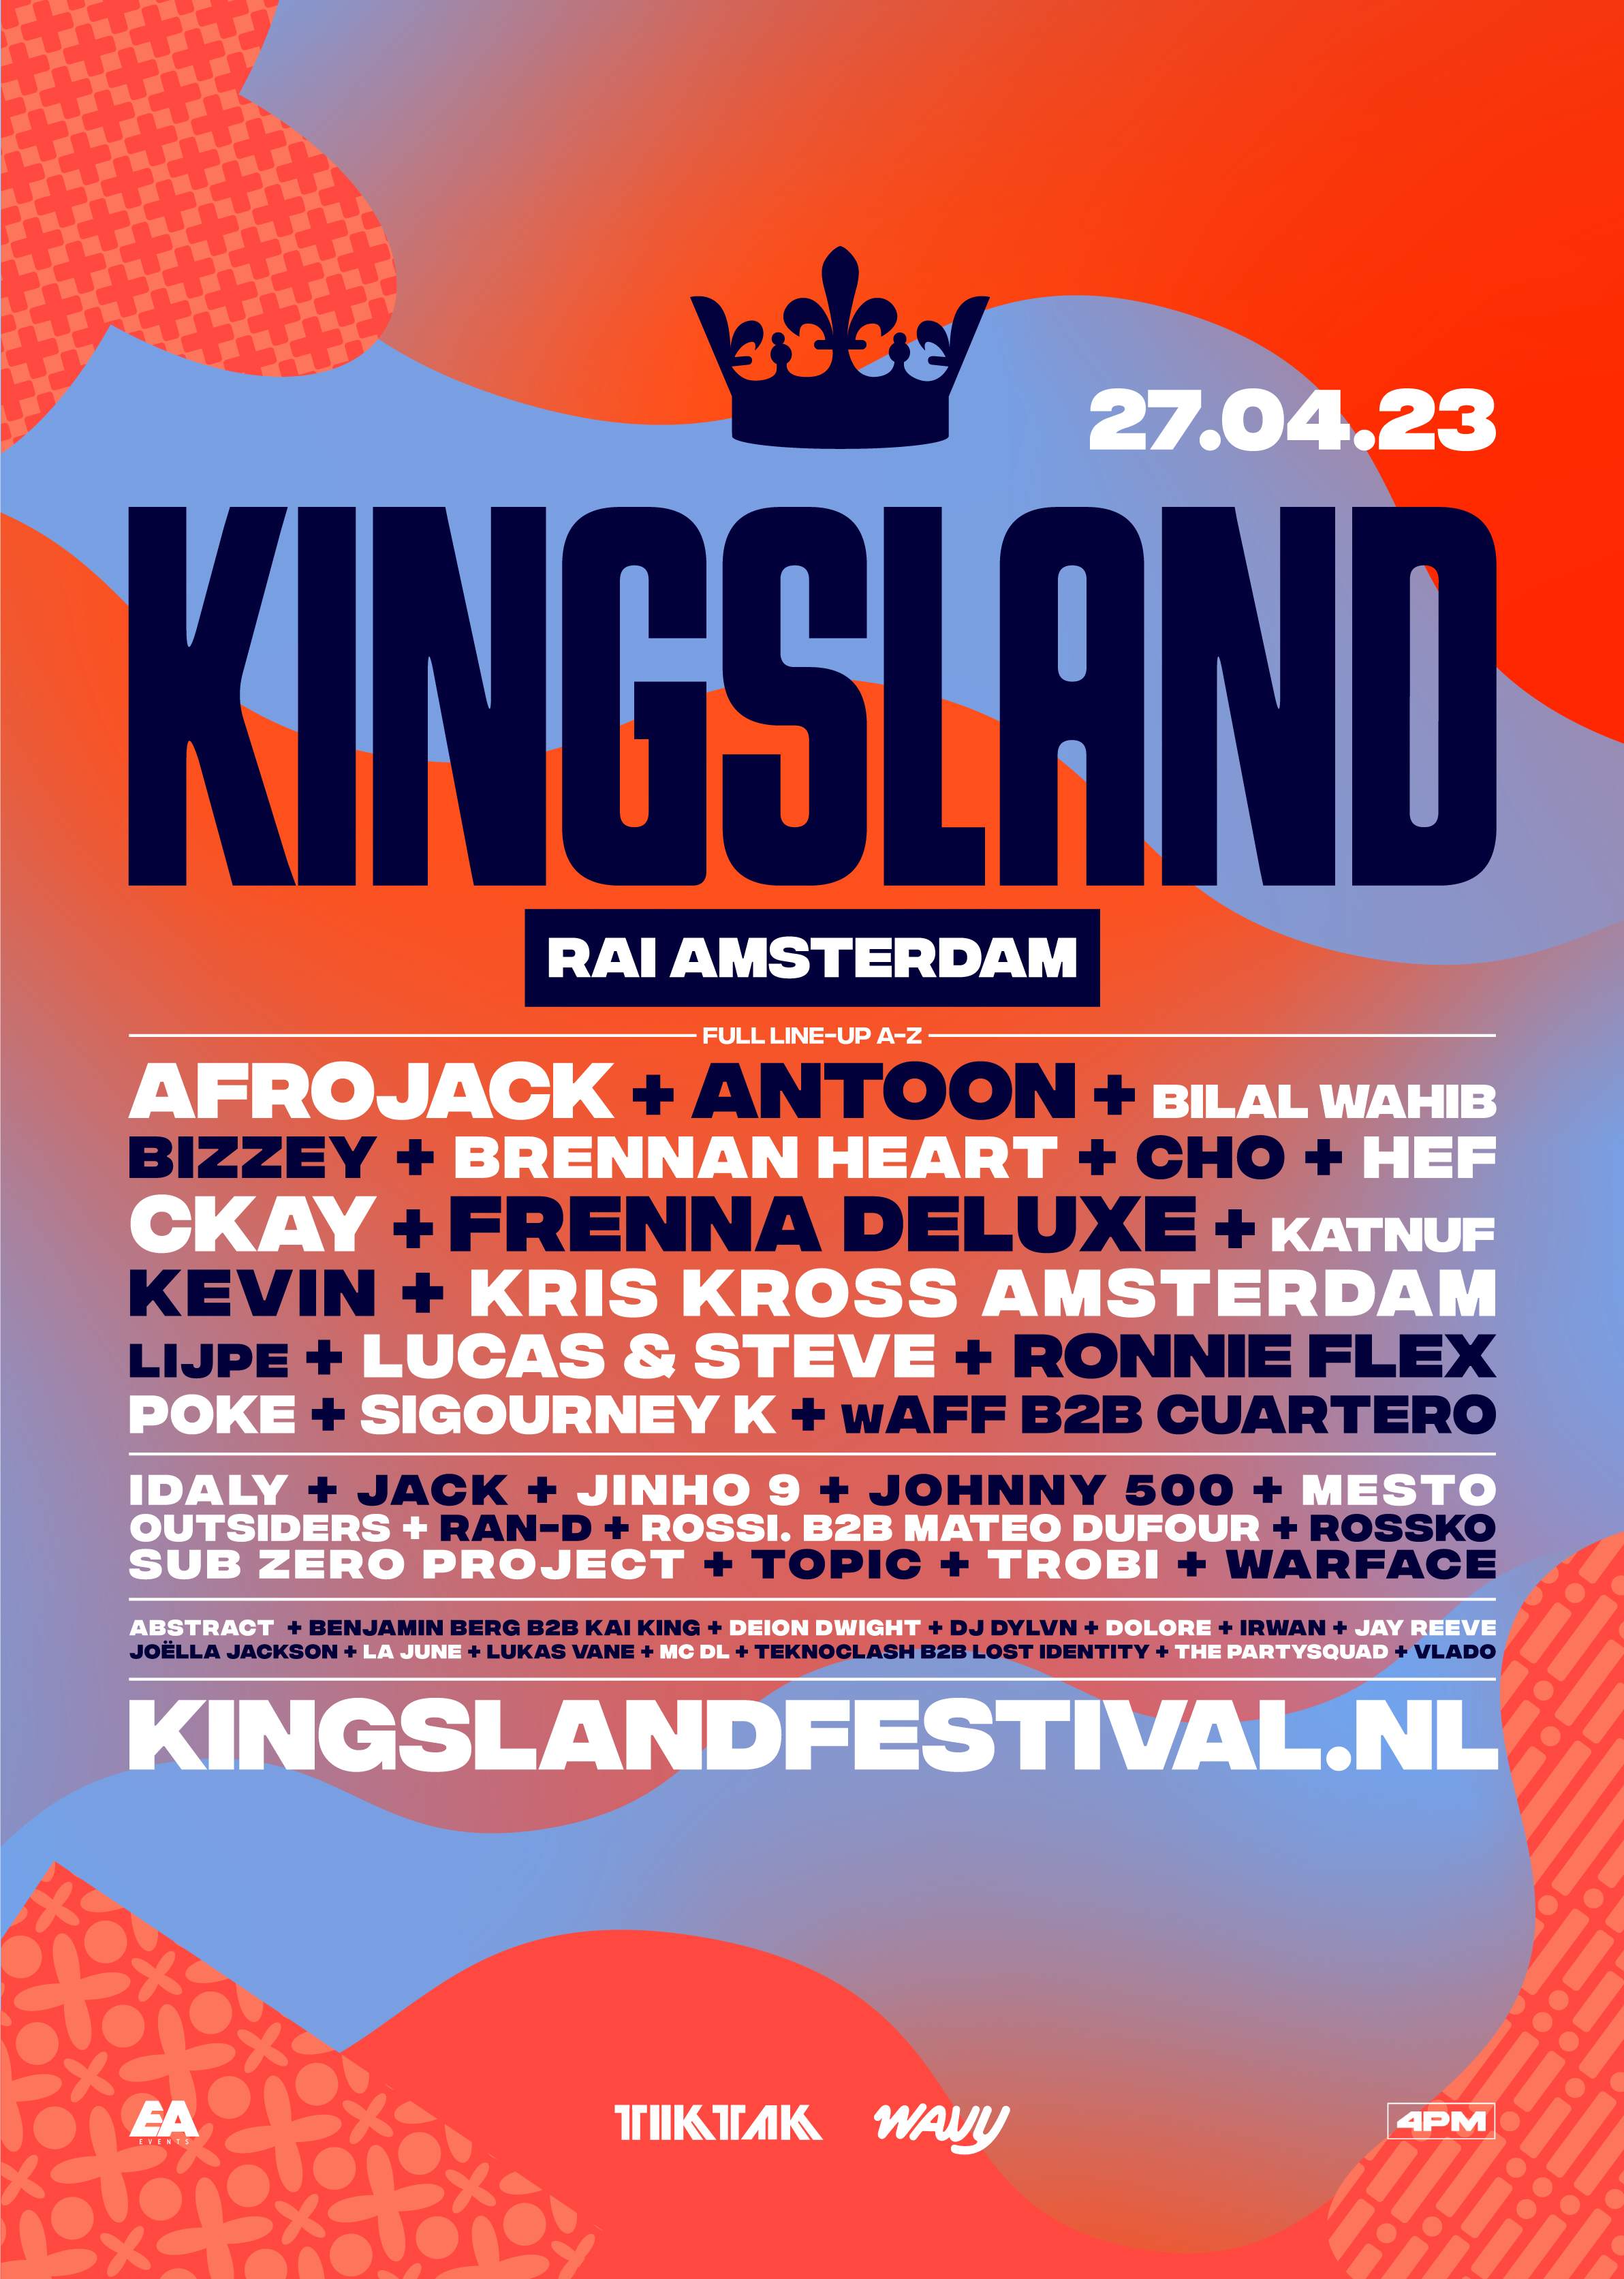 Kingsland Festival 2023 Amsterdam at Amsterdam RAI, Amsterdam